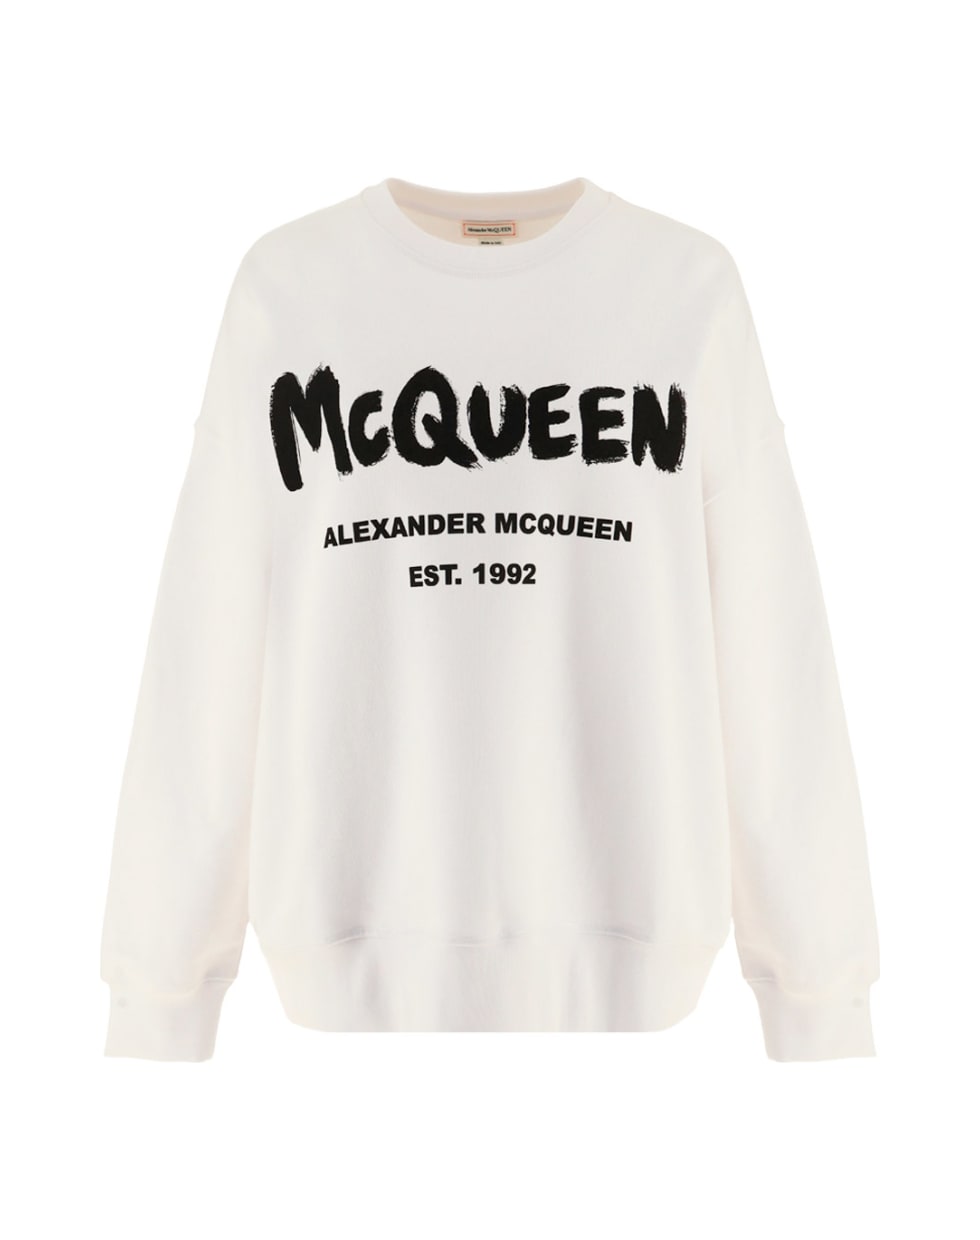 Alexander McQueen Alexander Mc Queen Graffiti Sweatshirt - White/black